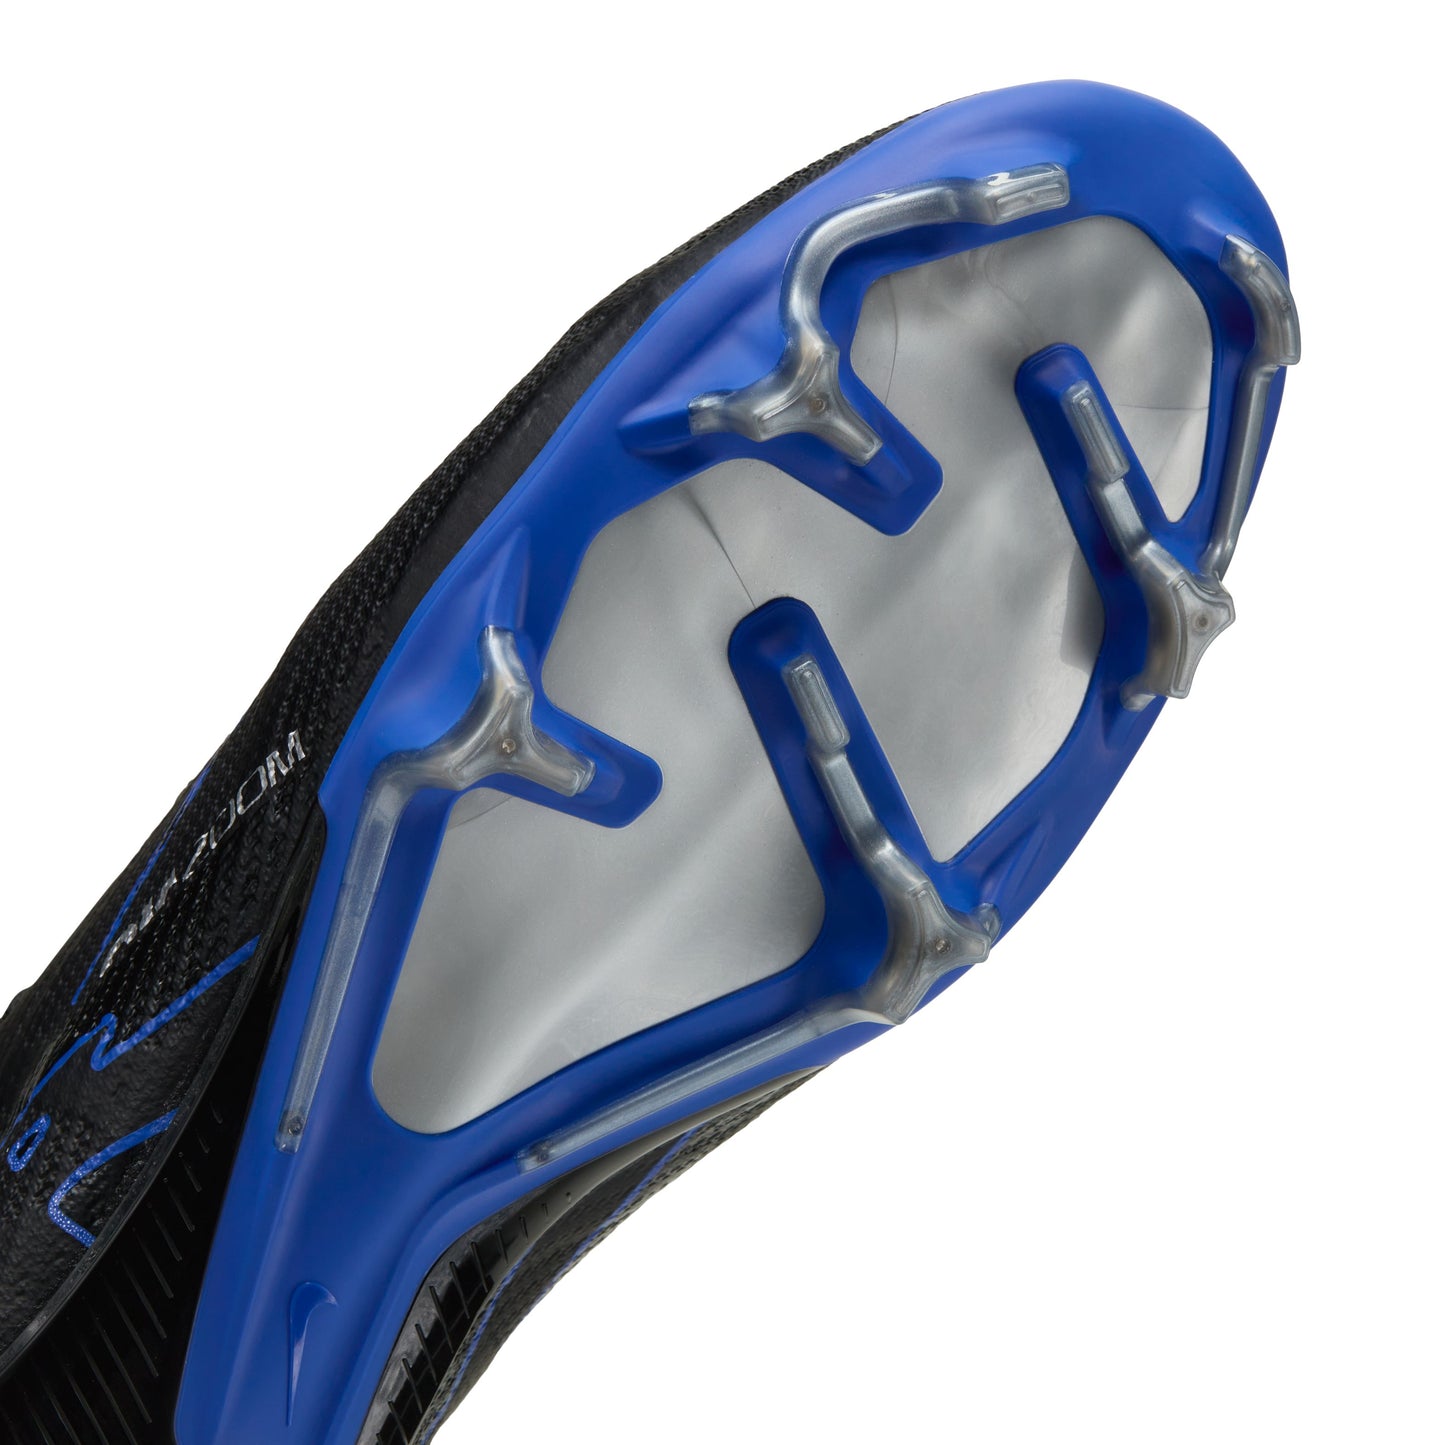 Nike Zoom Mercurial Vapor 15 Pro FG Soccer Cleats Black Blue